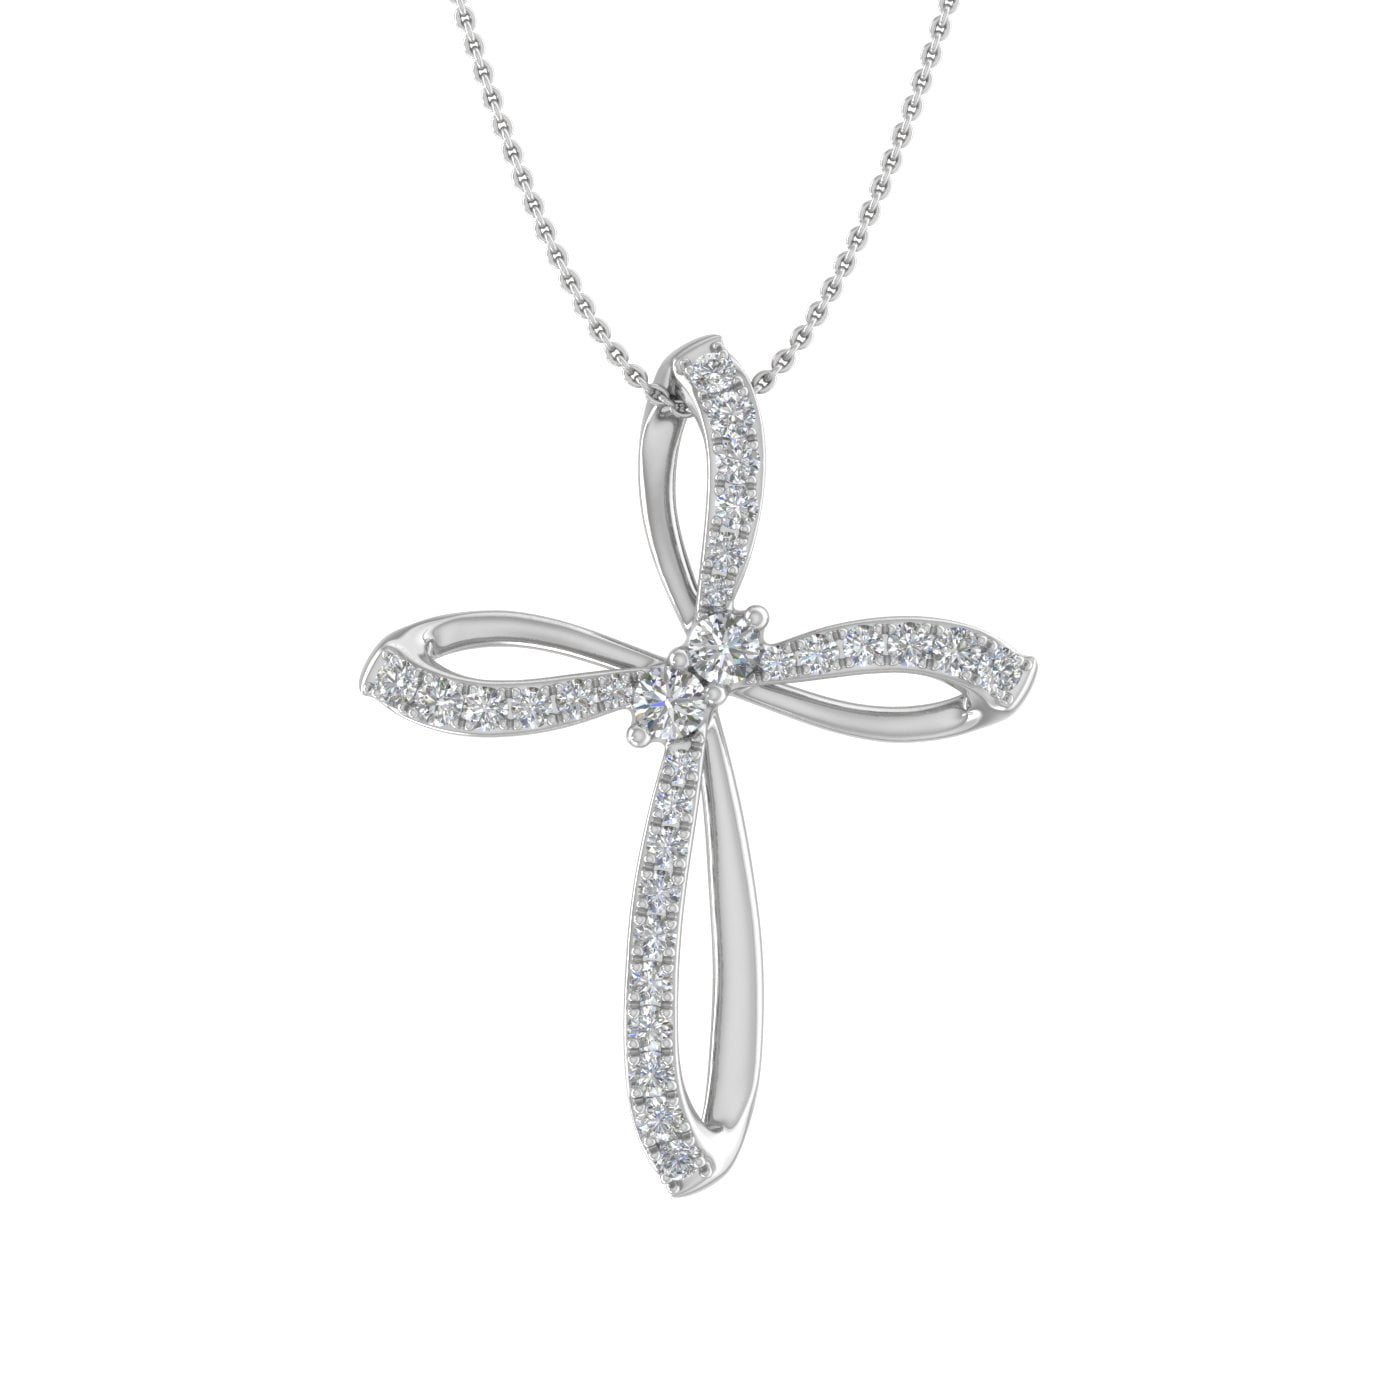 Divinity Cross Pendant, Silver Cross Necklace Pendant